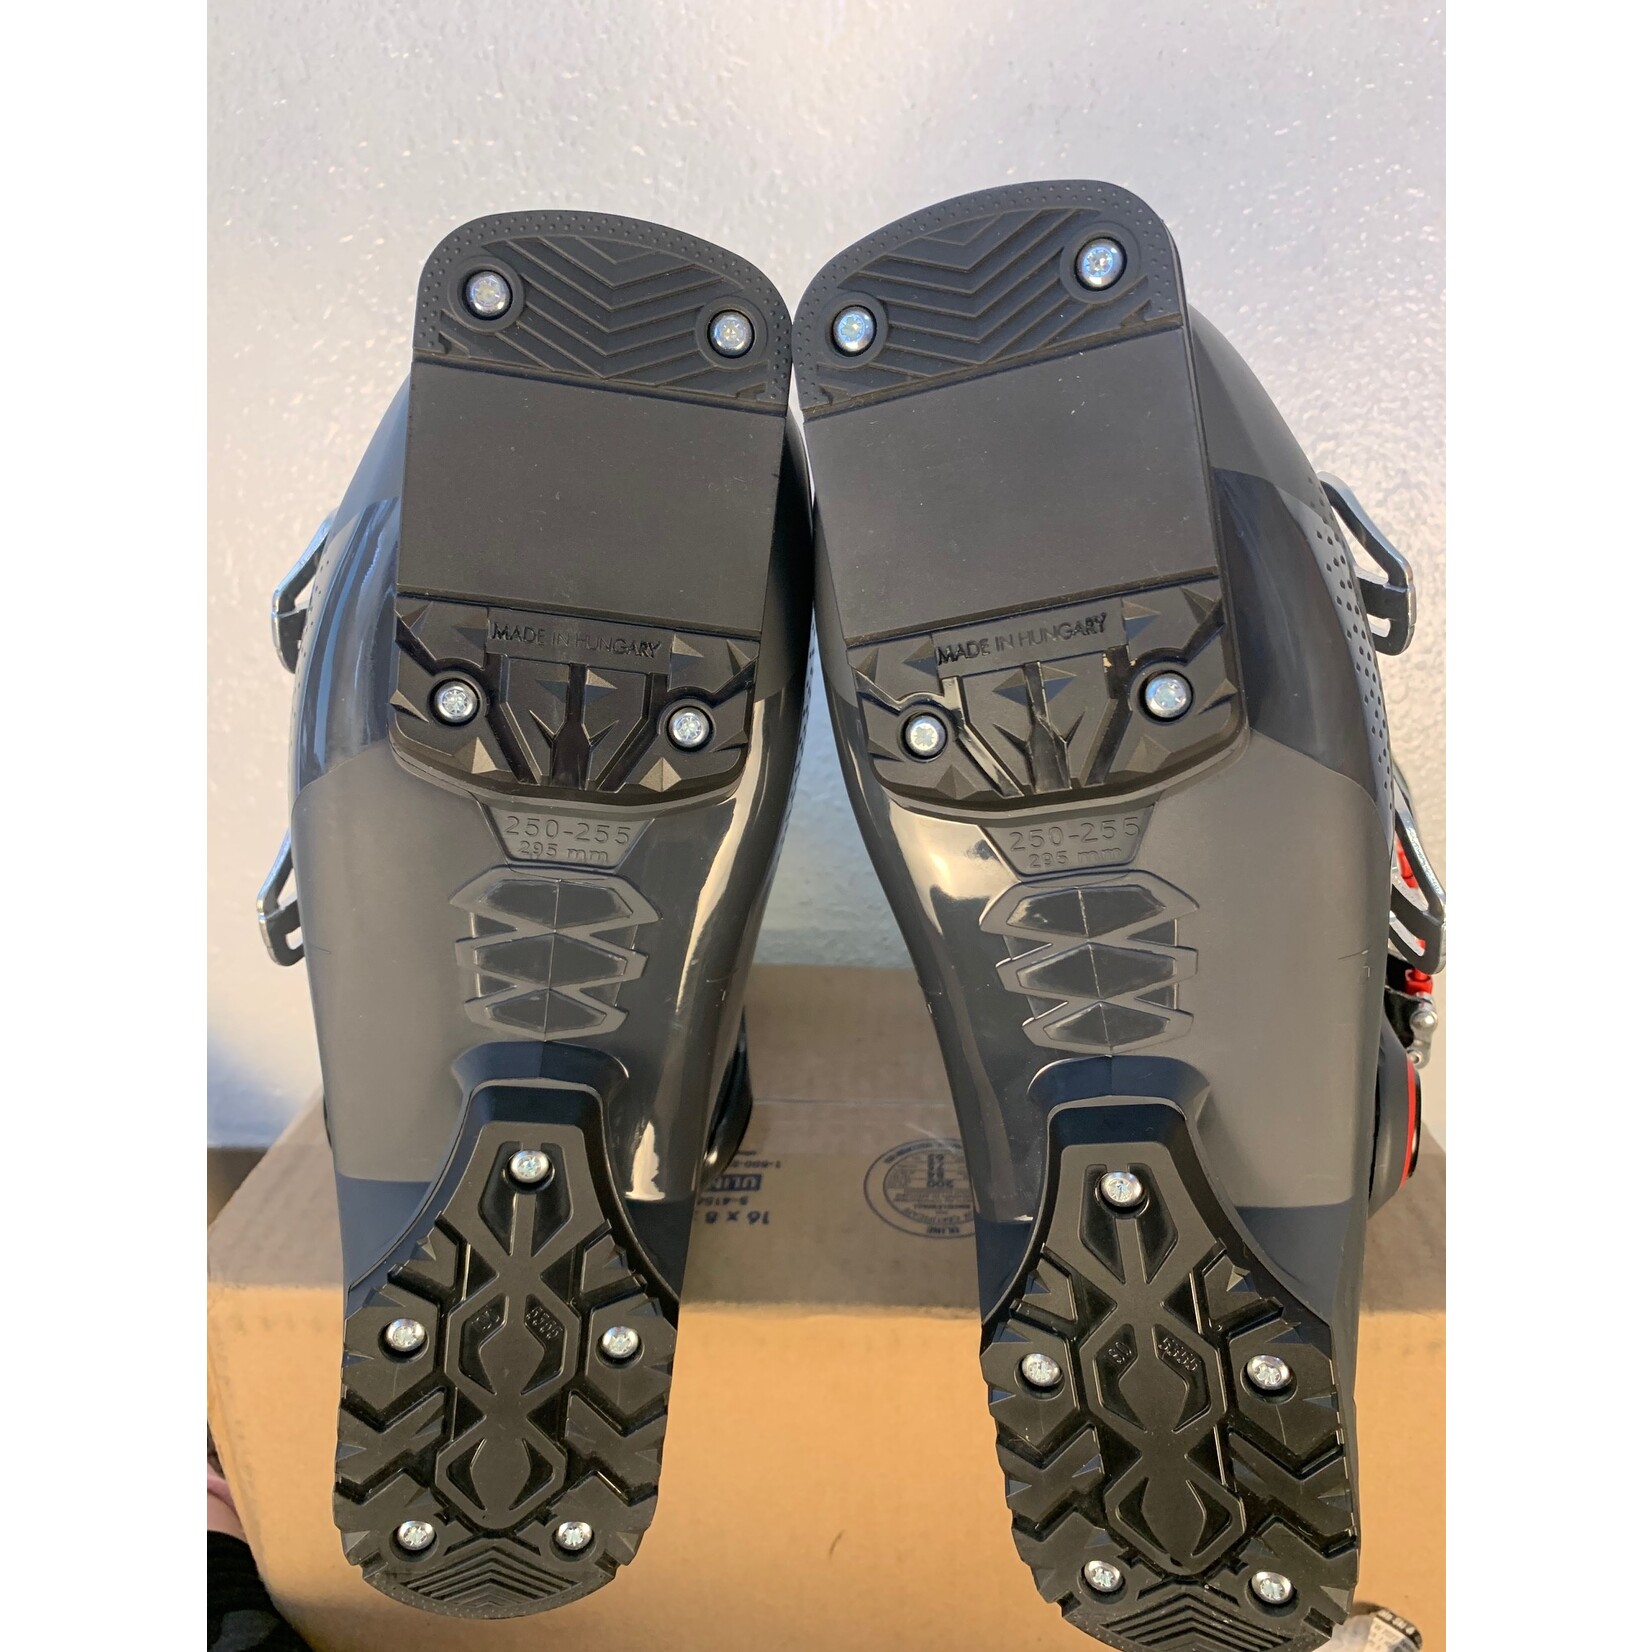 Tecnica NEW 2022 Tecnica Mach 1 100 HV Ski Boots, Size 25.5